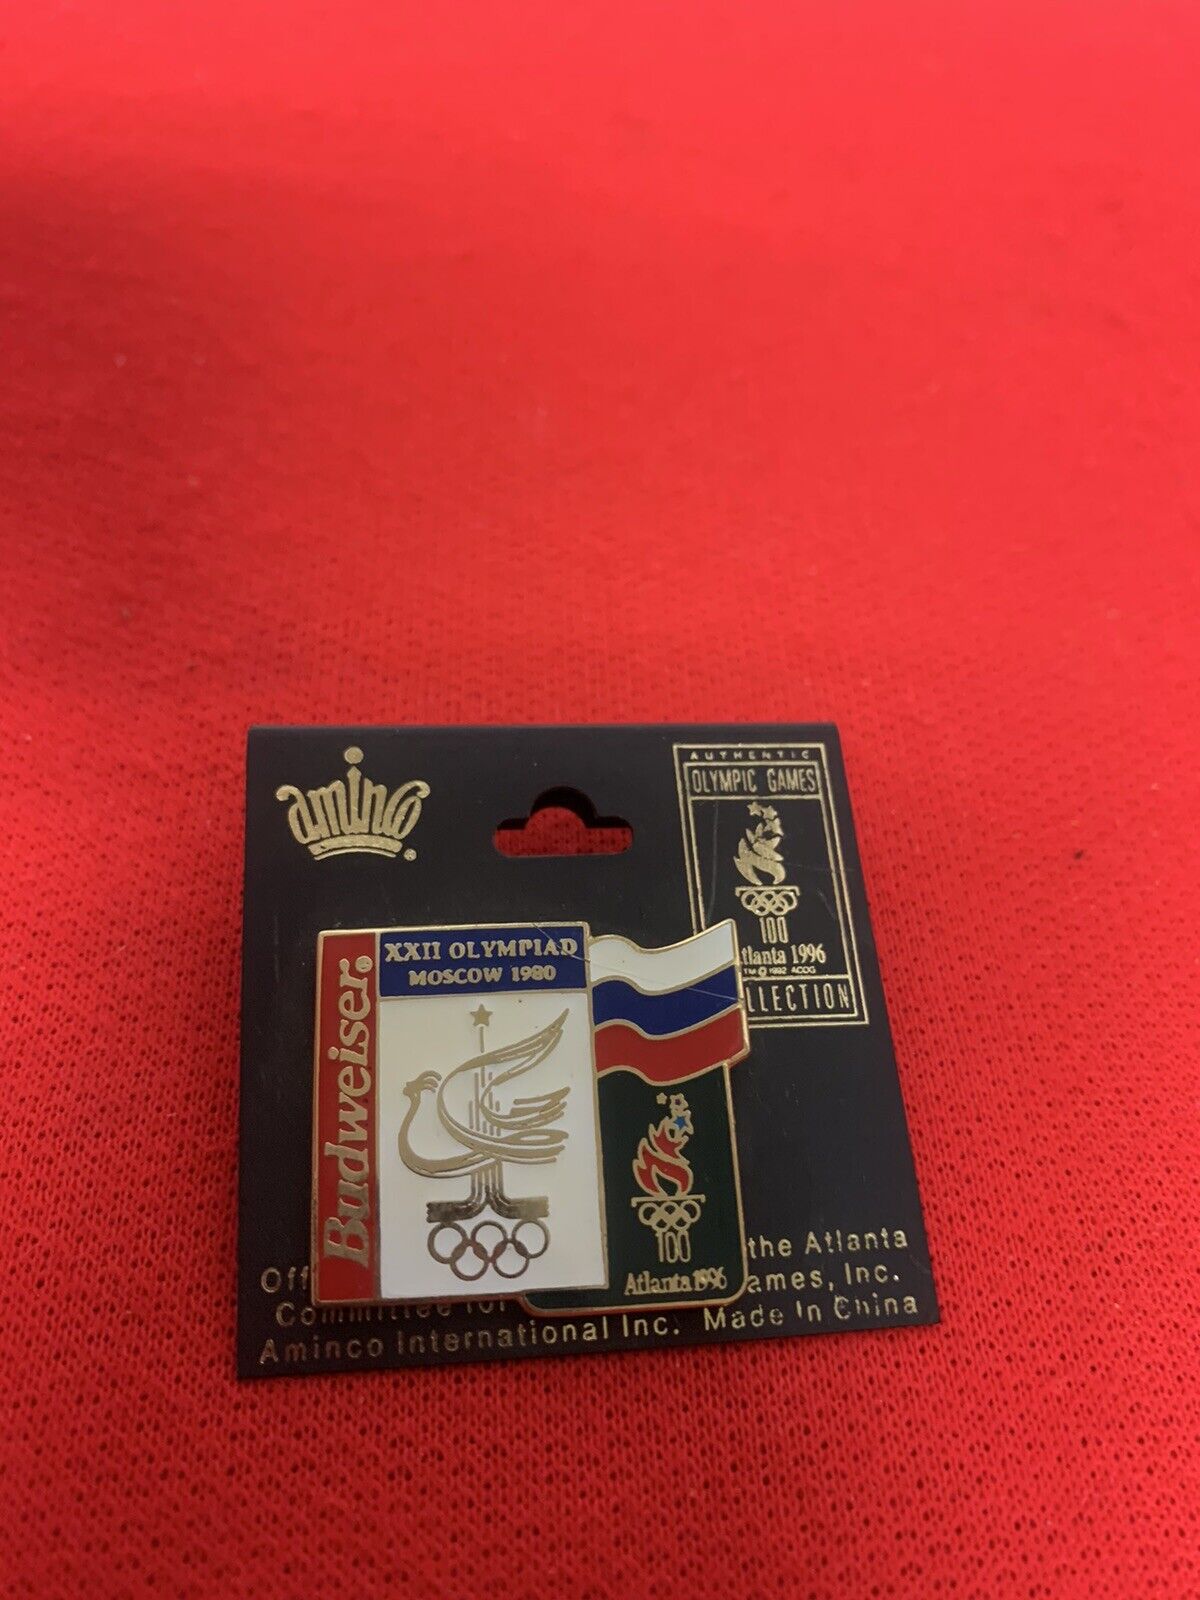 Authentic Olympic Games 1980 XXII Olympiad Moscow / Atlanta 1996 Budweiser Pin